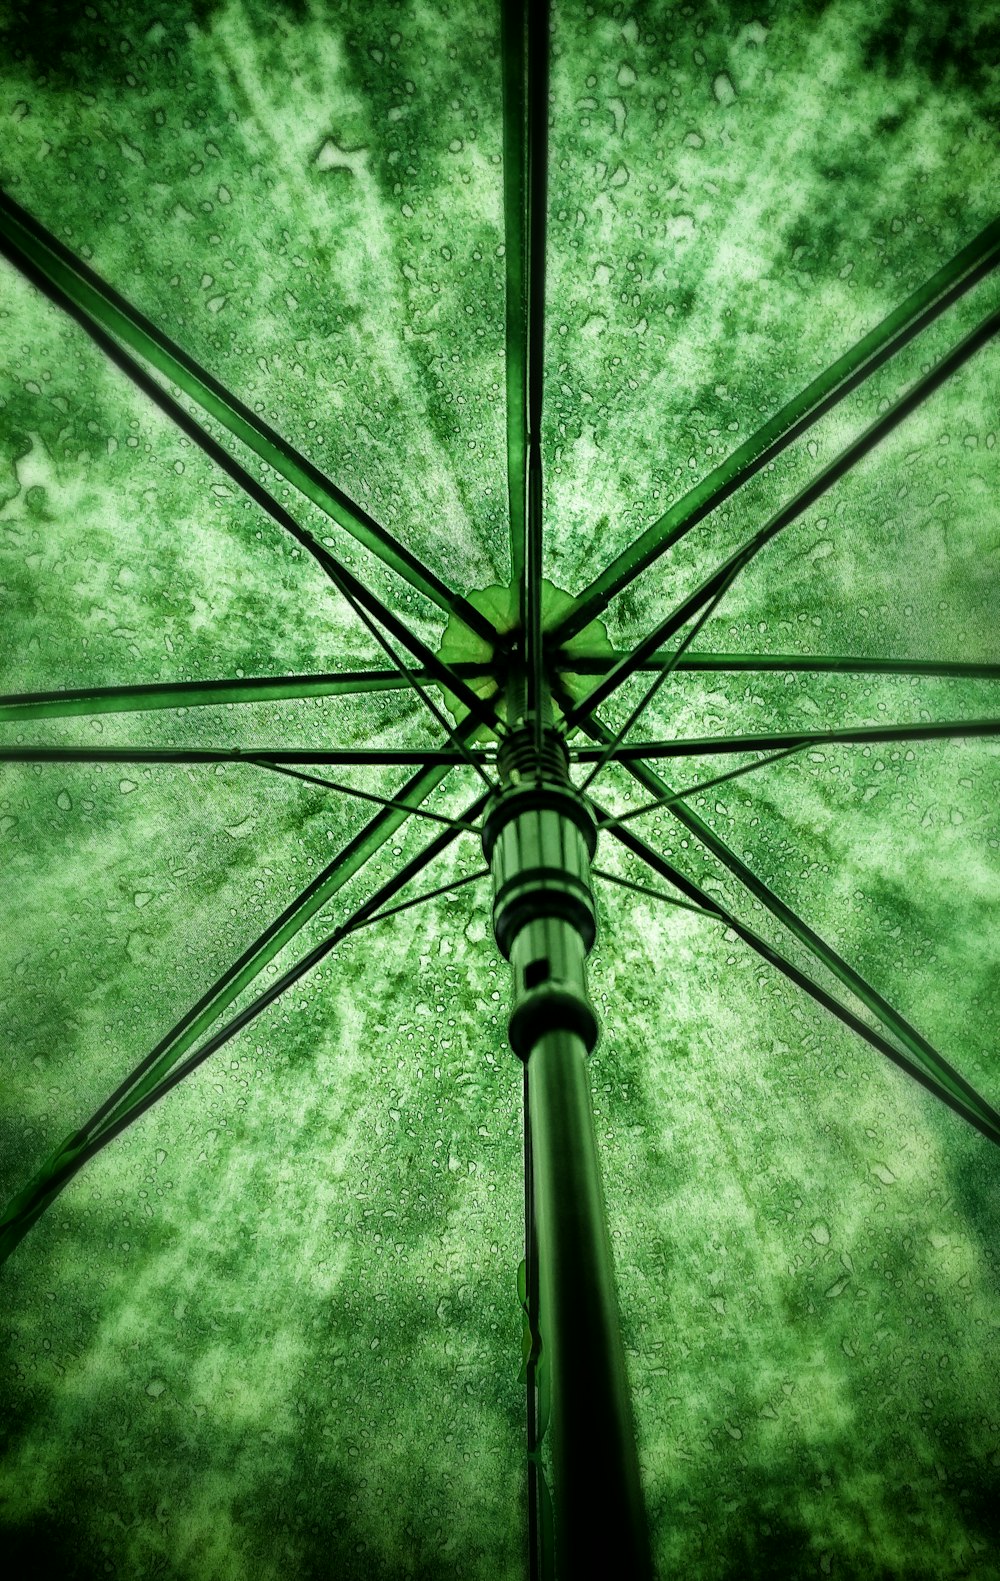 photo of green umbrella